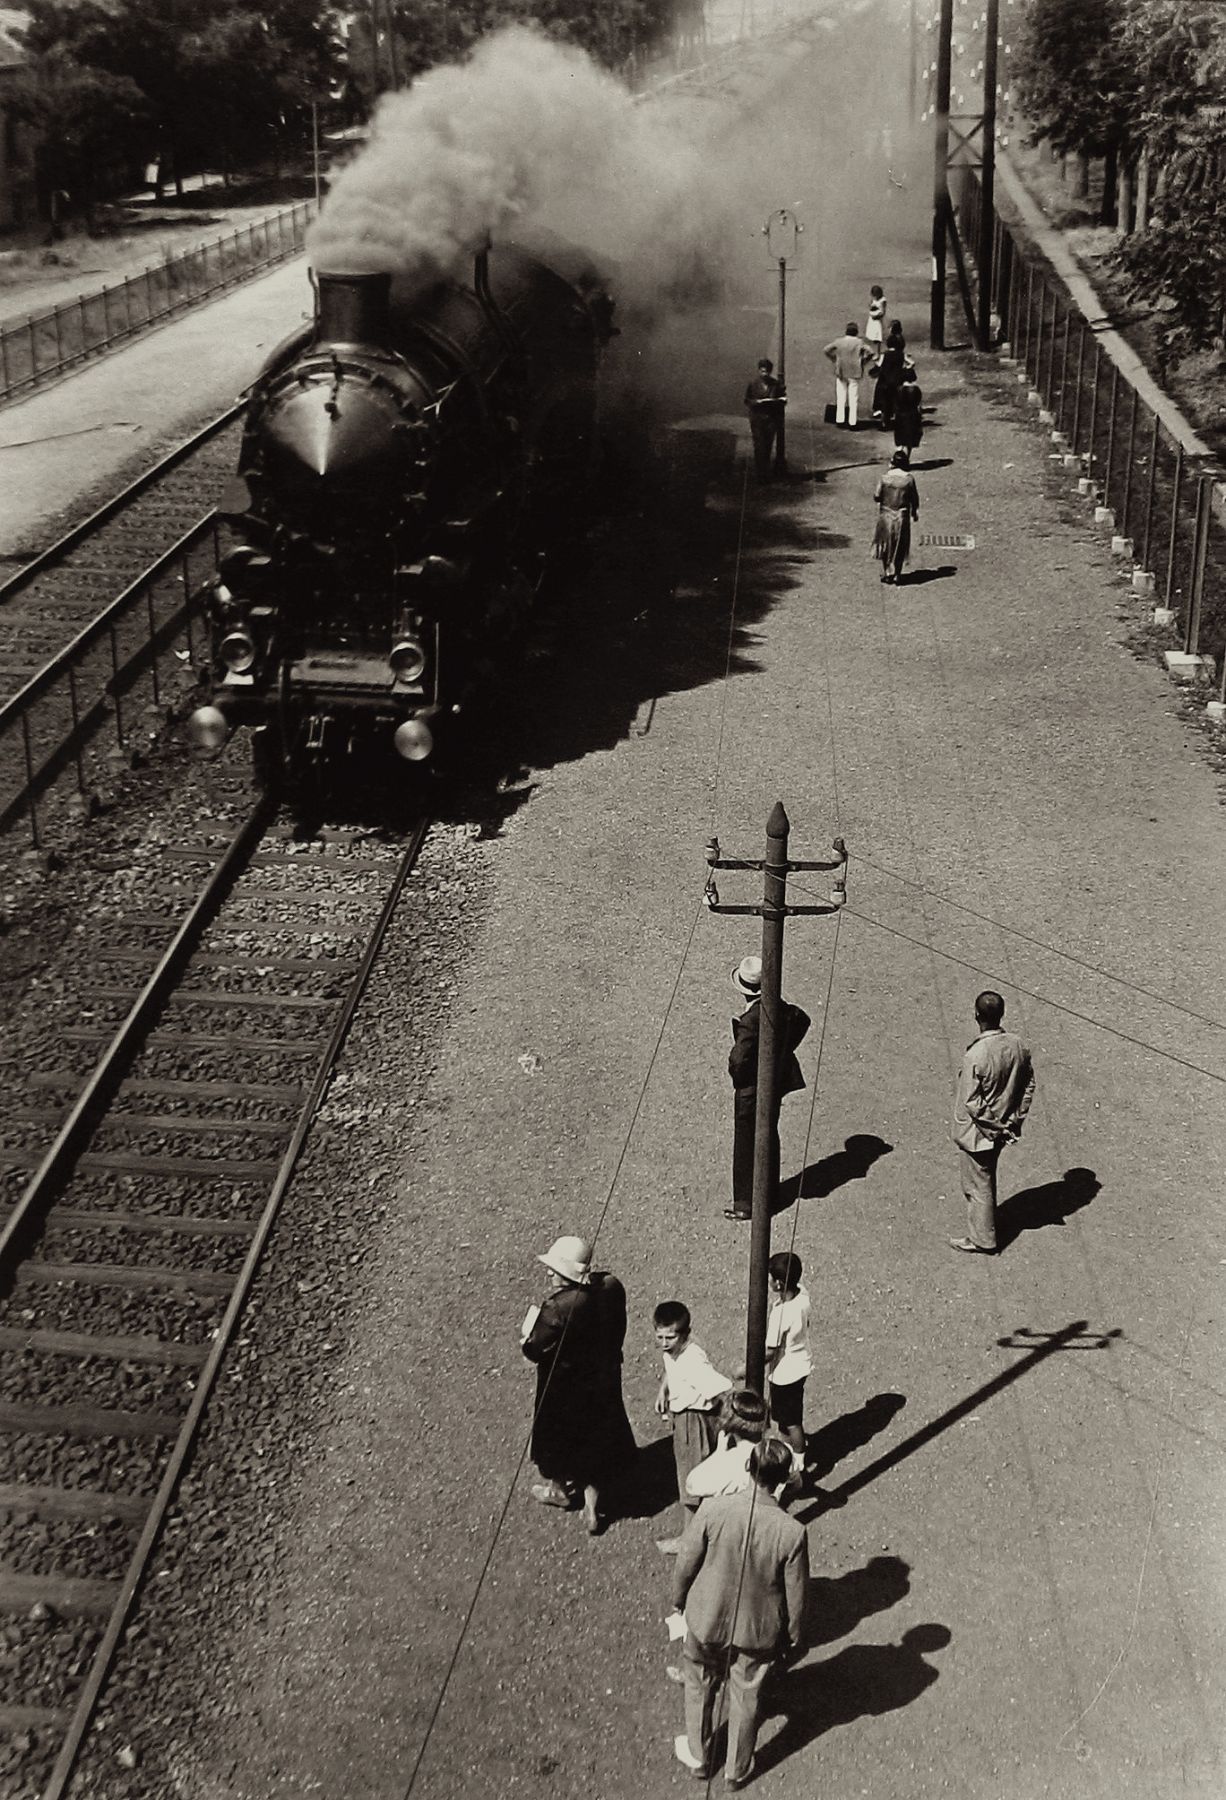 imre kinszki, fast train coming, hungary, gelatin silver print, c. 1935; (22.3 cm x 15.2 cm) collection howard greenberg gallery, new york